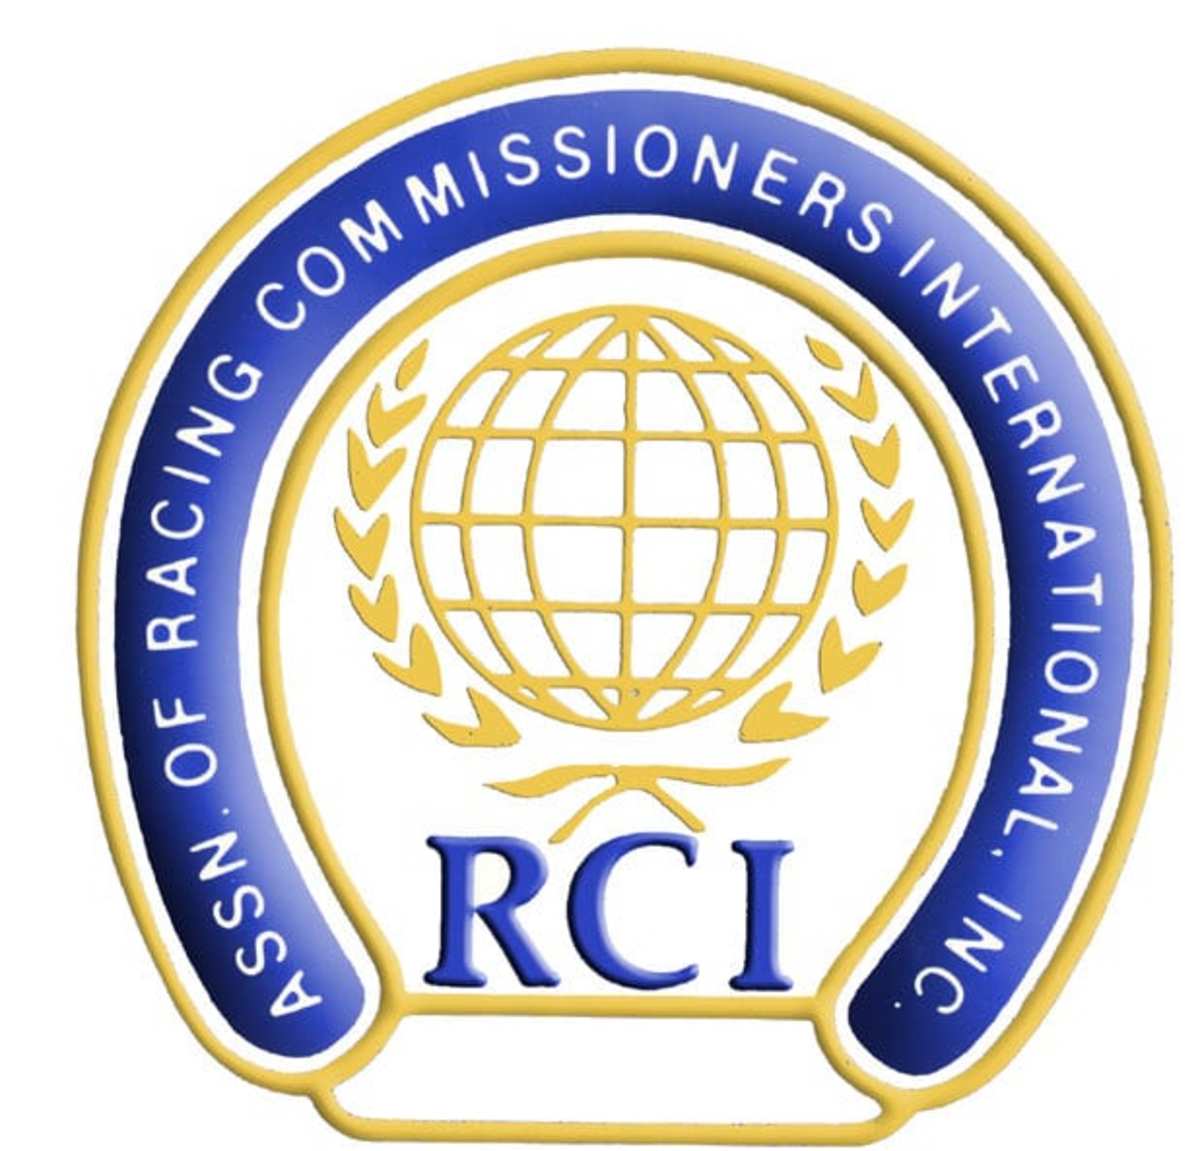 RCI - Resort Condominiums International, Inc. Trademark Registration